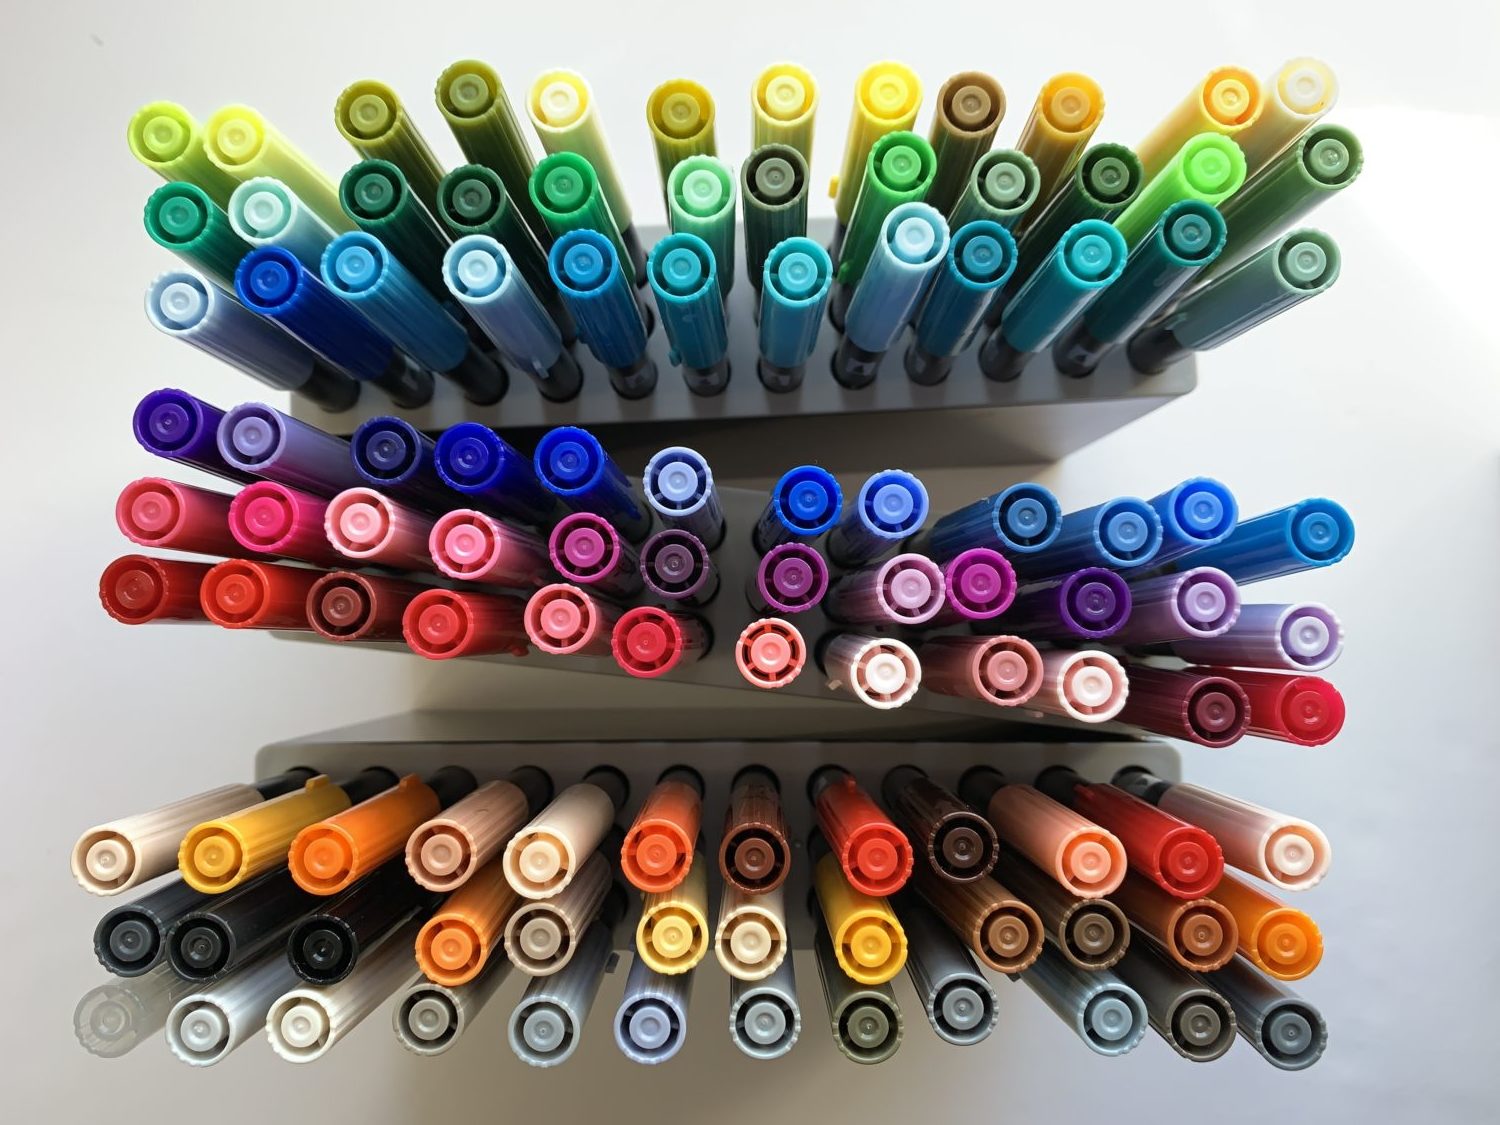 4 Ways to Use Your Pastel Tombow Dual Brush Pens - Tombow USA Blog